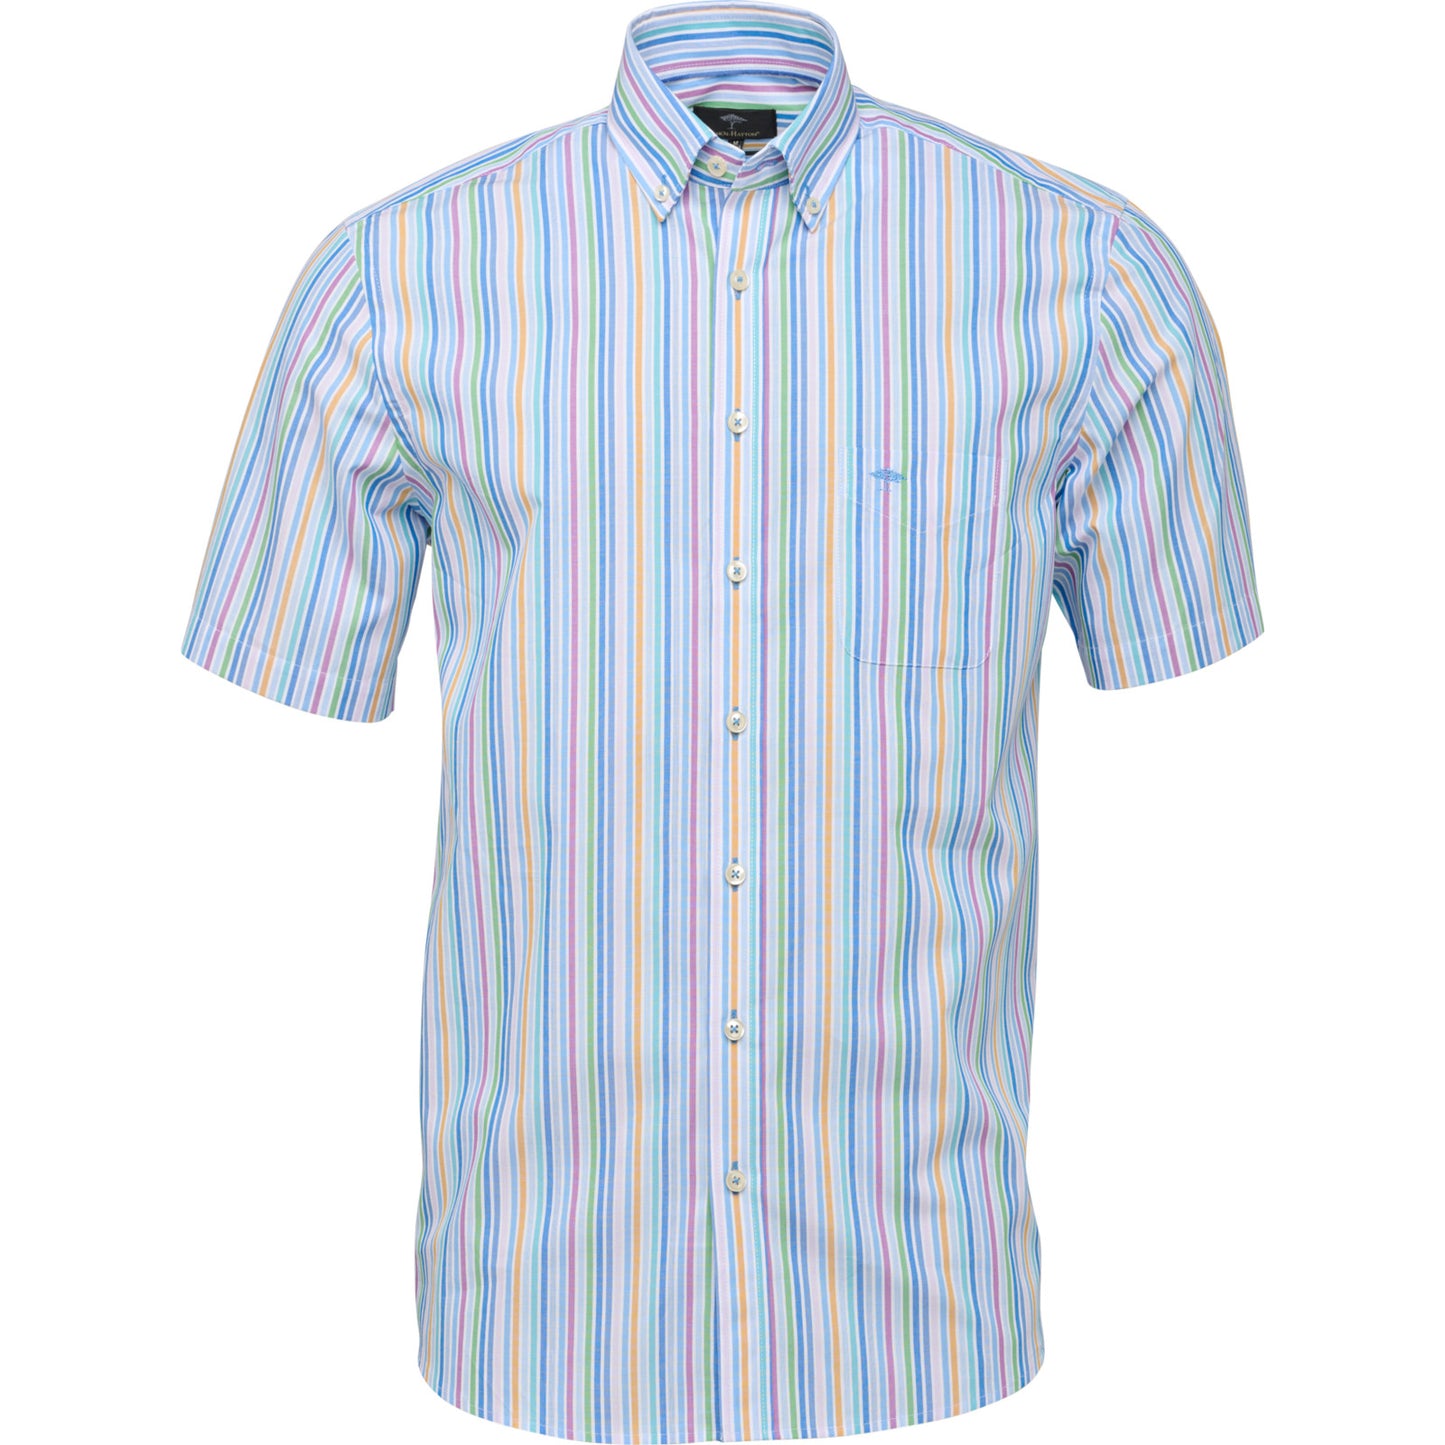 Fynch Hatton 1122 8171 8170 Multicolour Stripe Short Sleeve Summer Striped Shirt